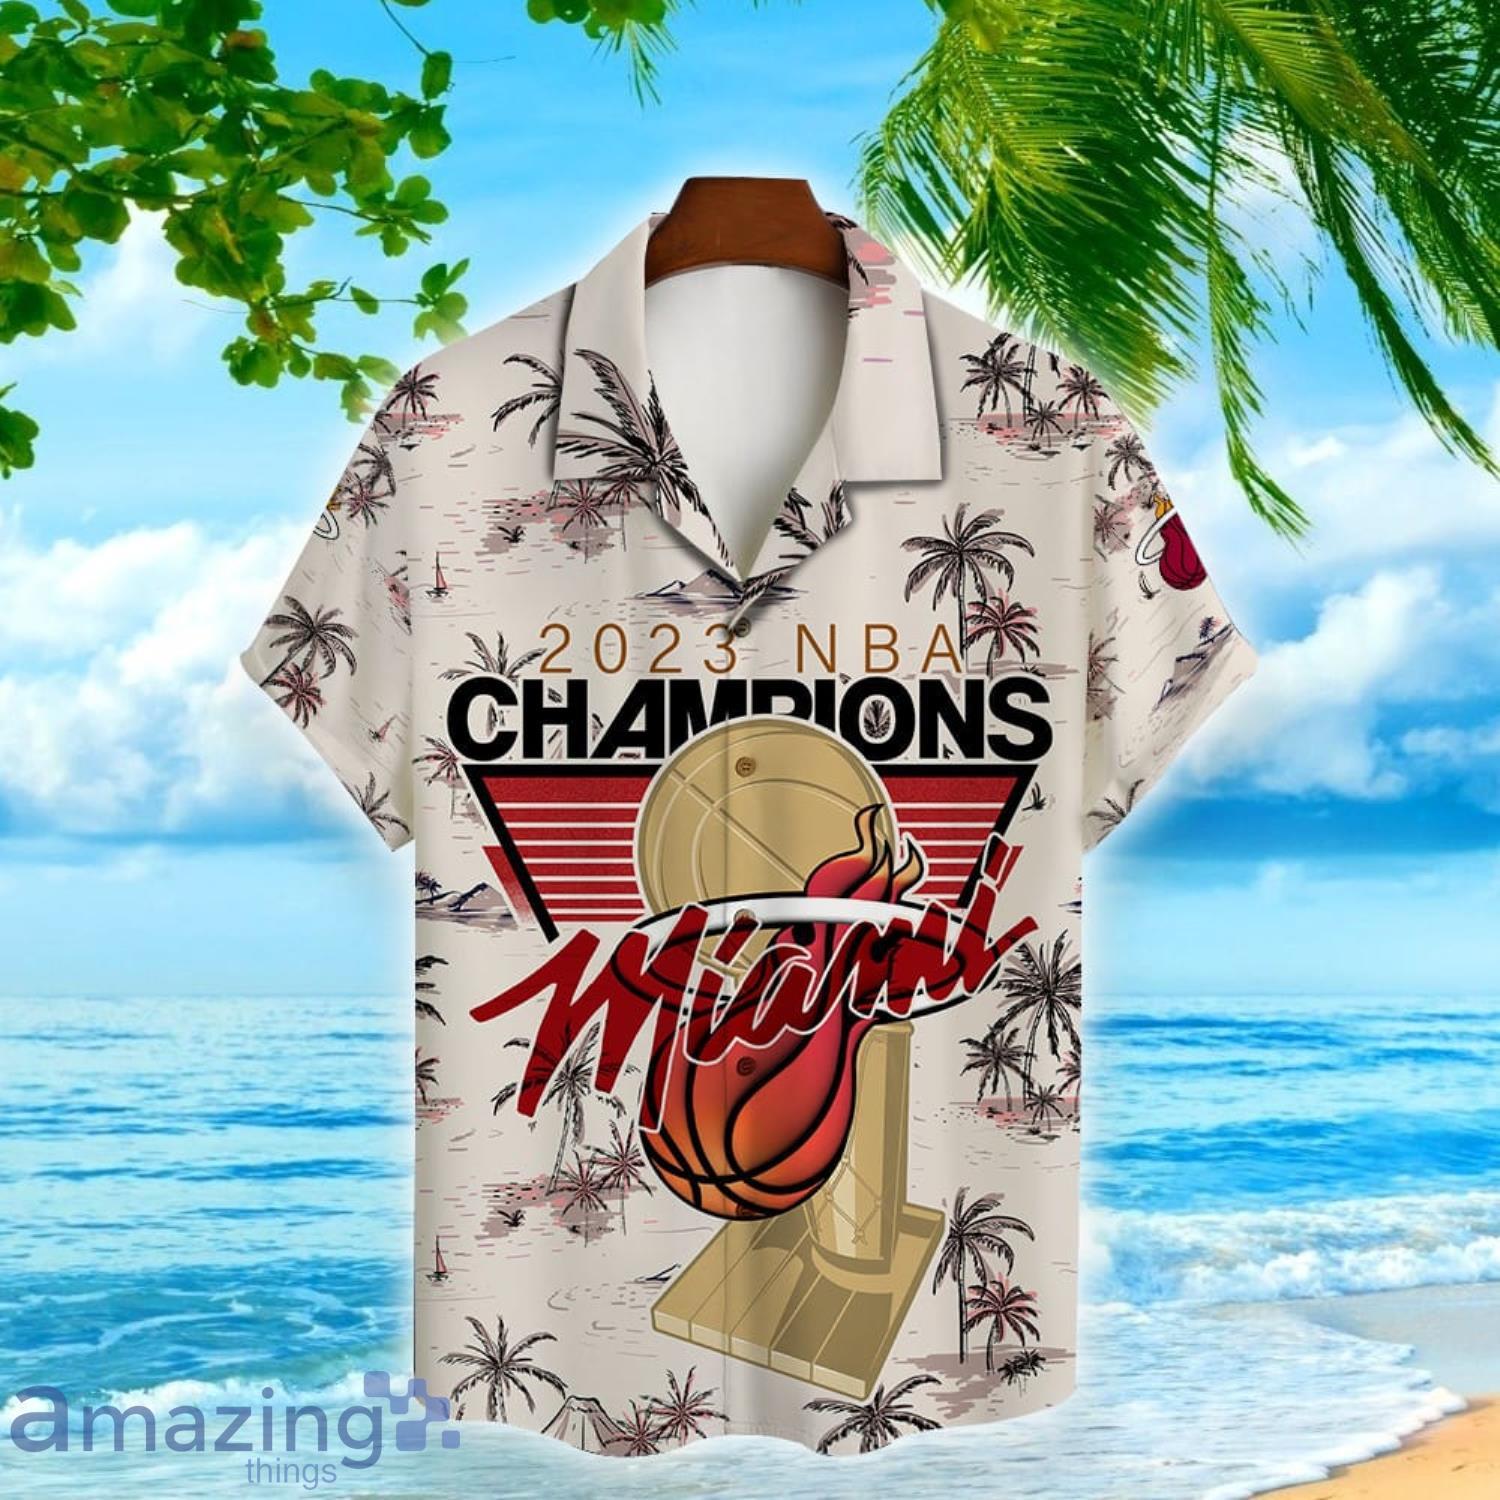 Miami Heat 2006 NBA Champions Tee